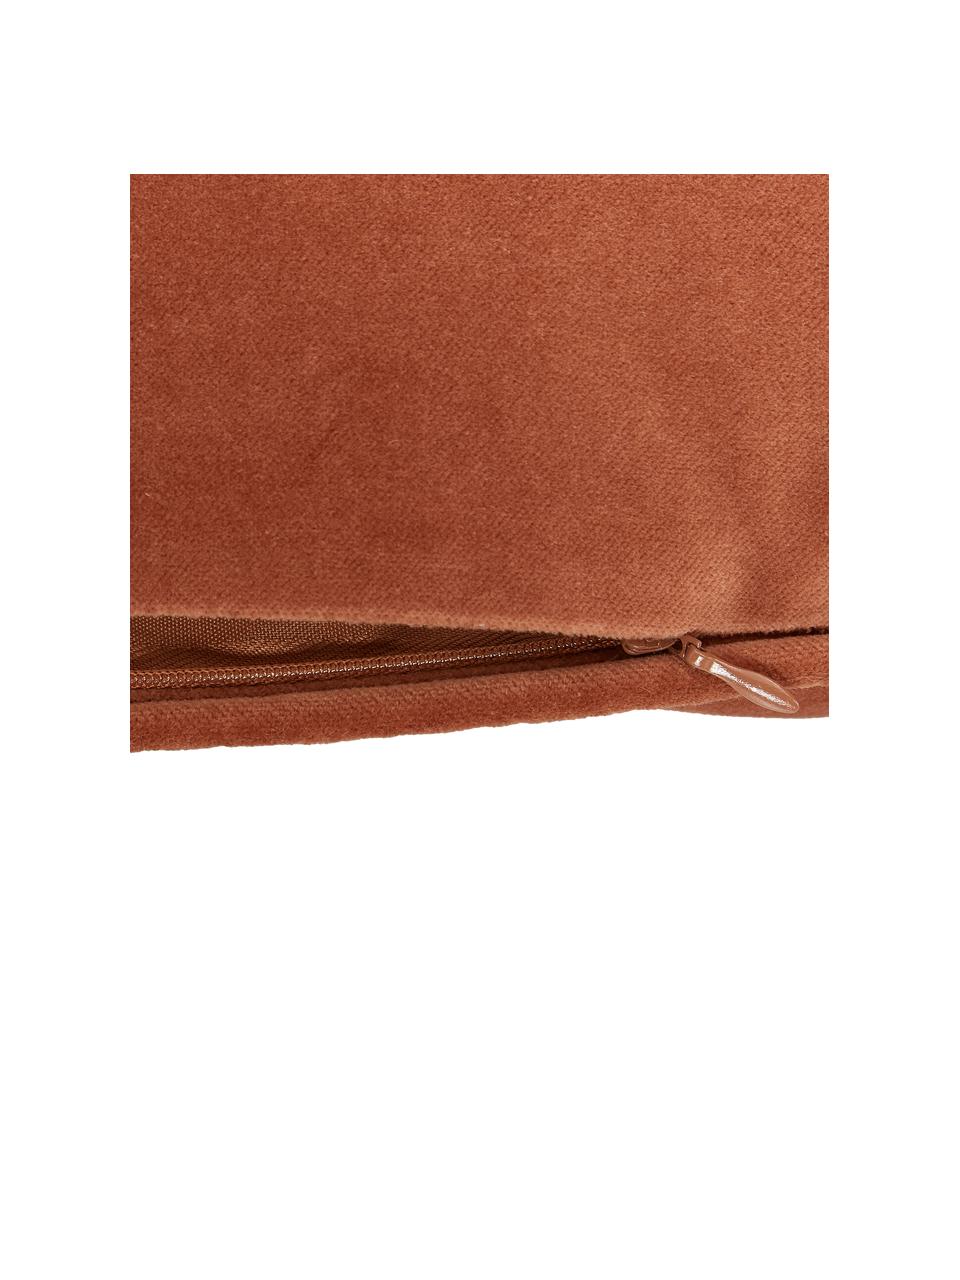 Effen fluwelen kussenhoes Dana in roodbruin, 100% katoenfluweel, Roodbruin, B 50 x L 50 cm